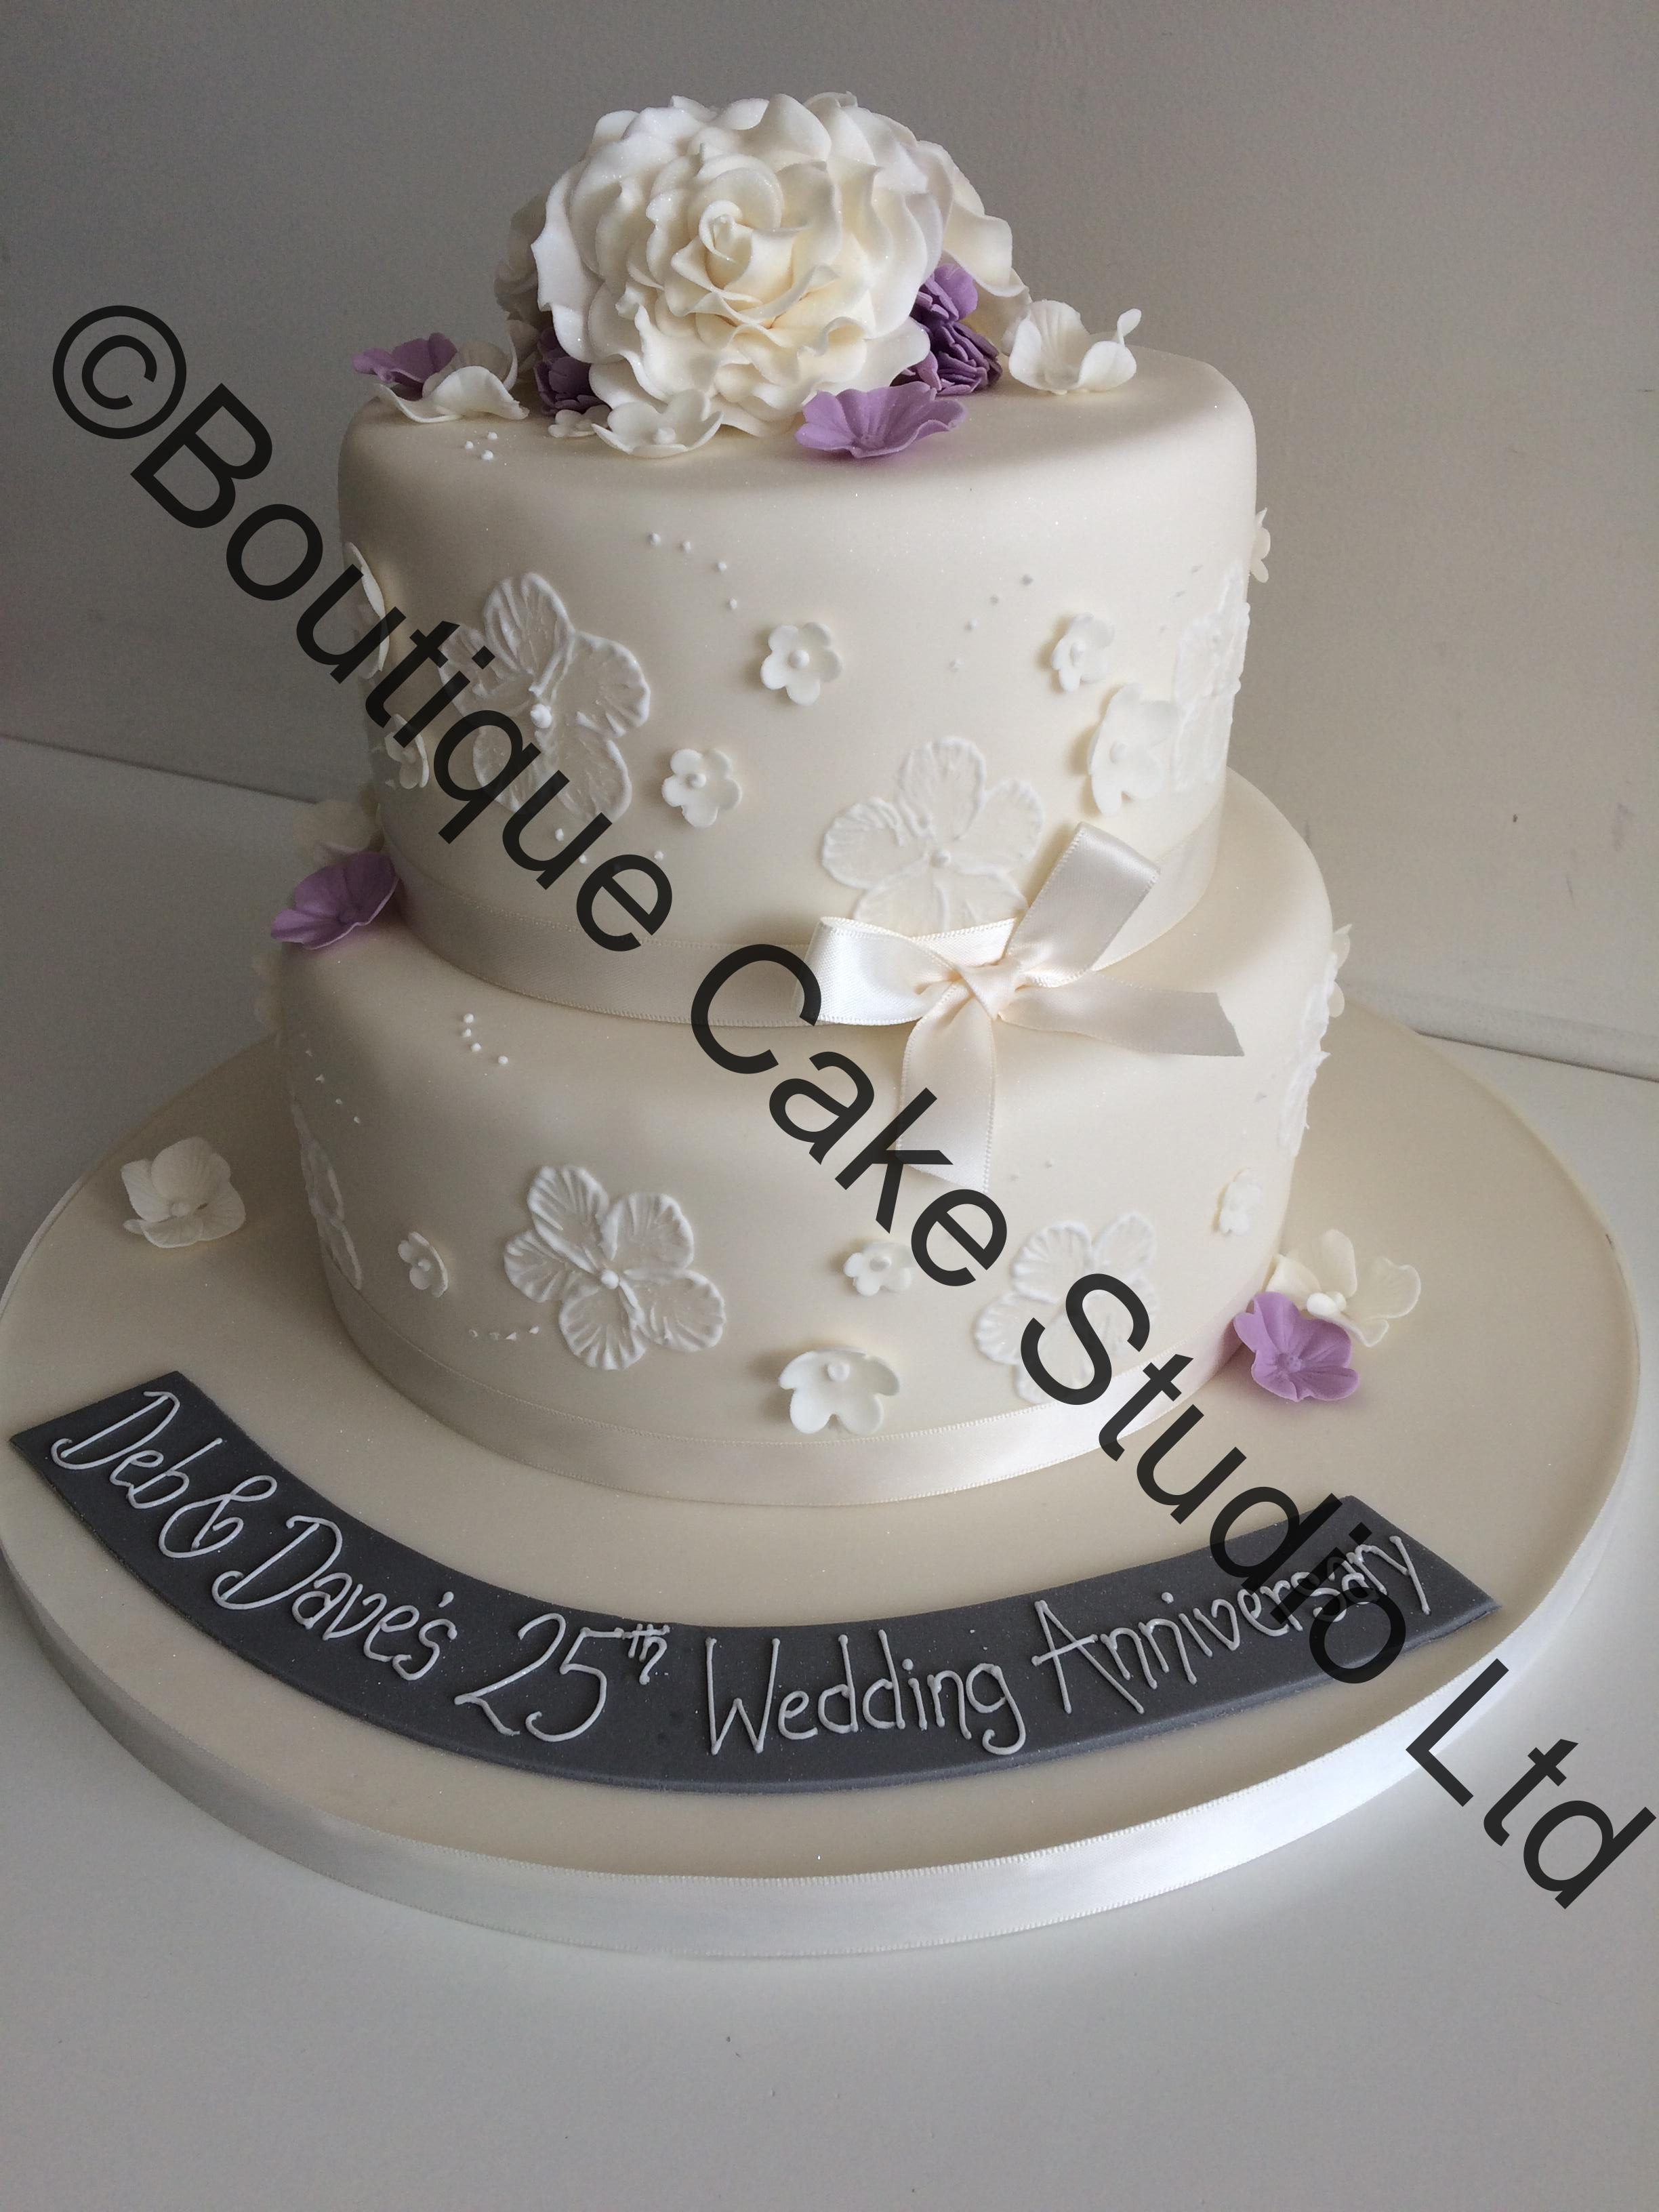 25th Wedding Anniversary Stacked Cake with brush